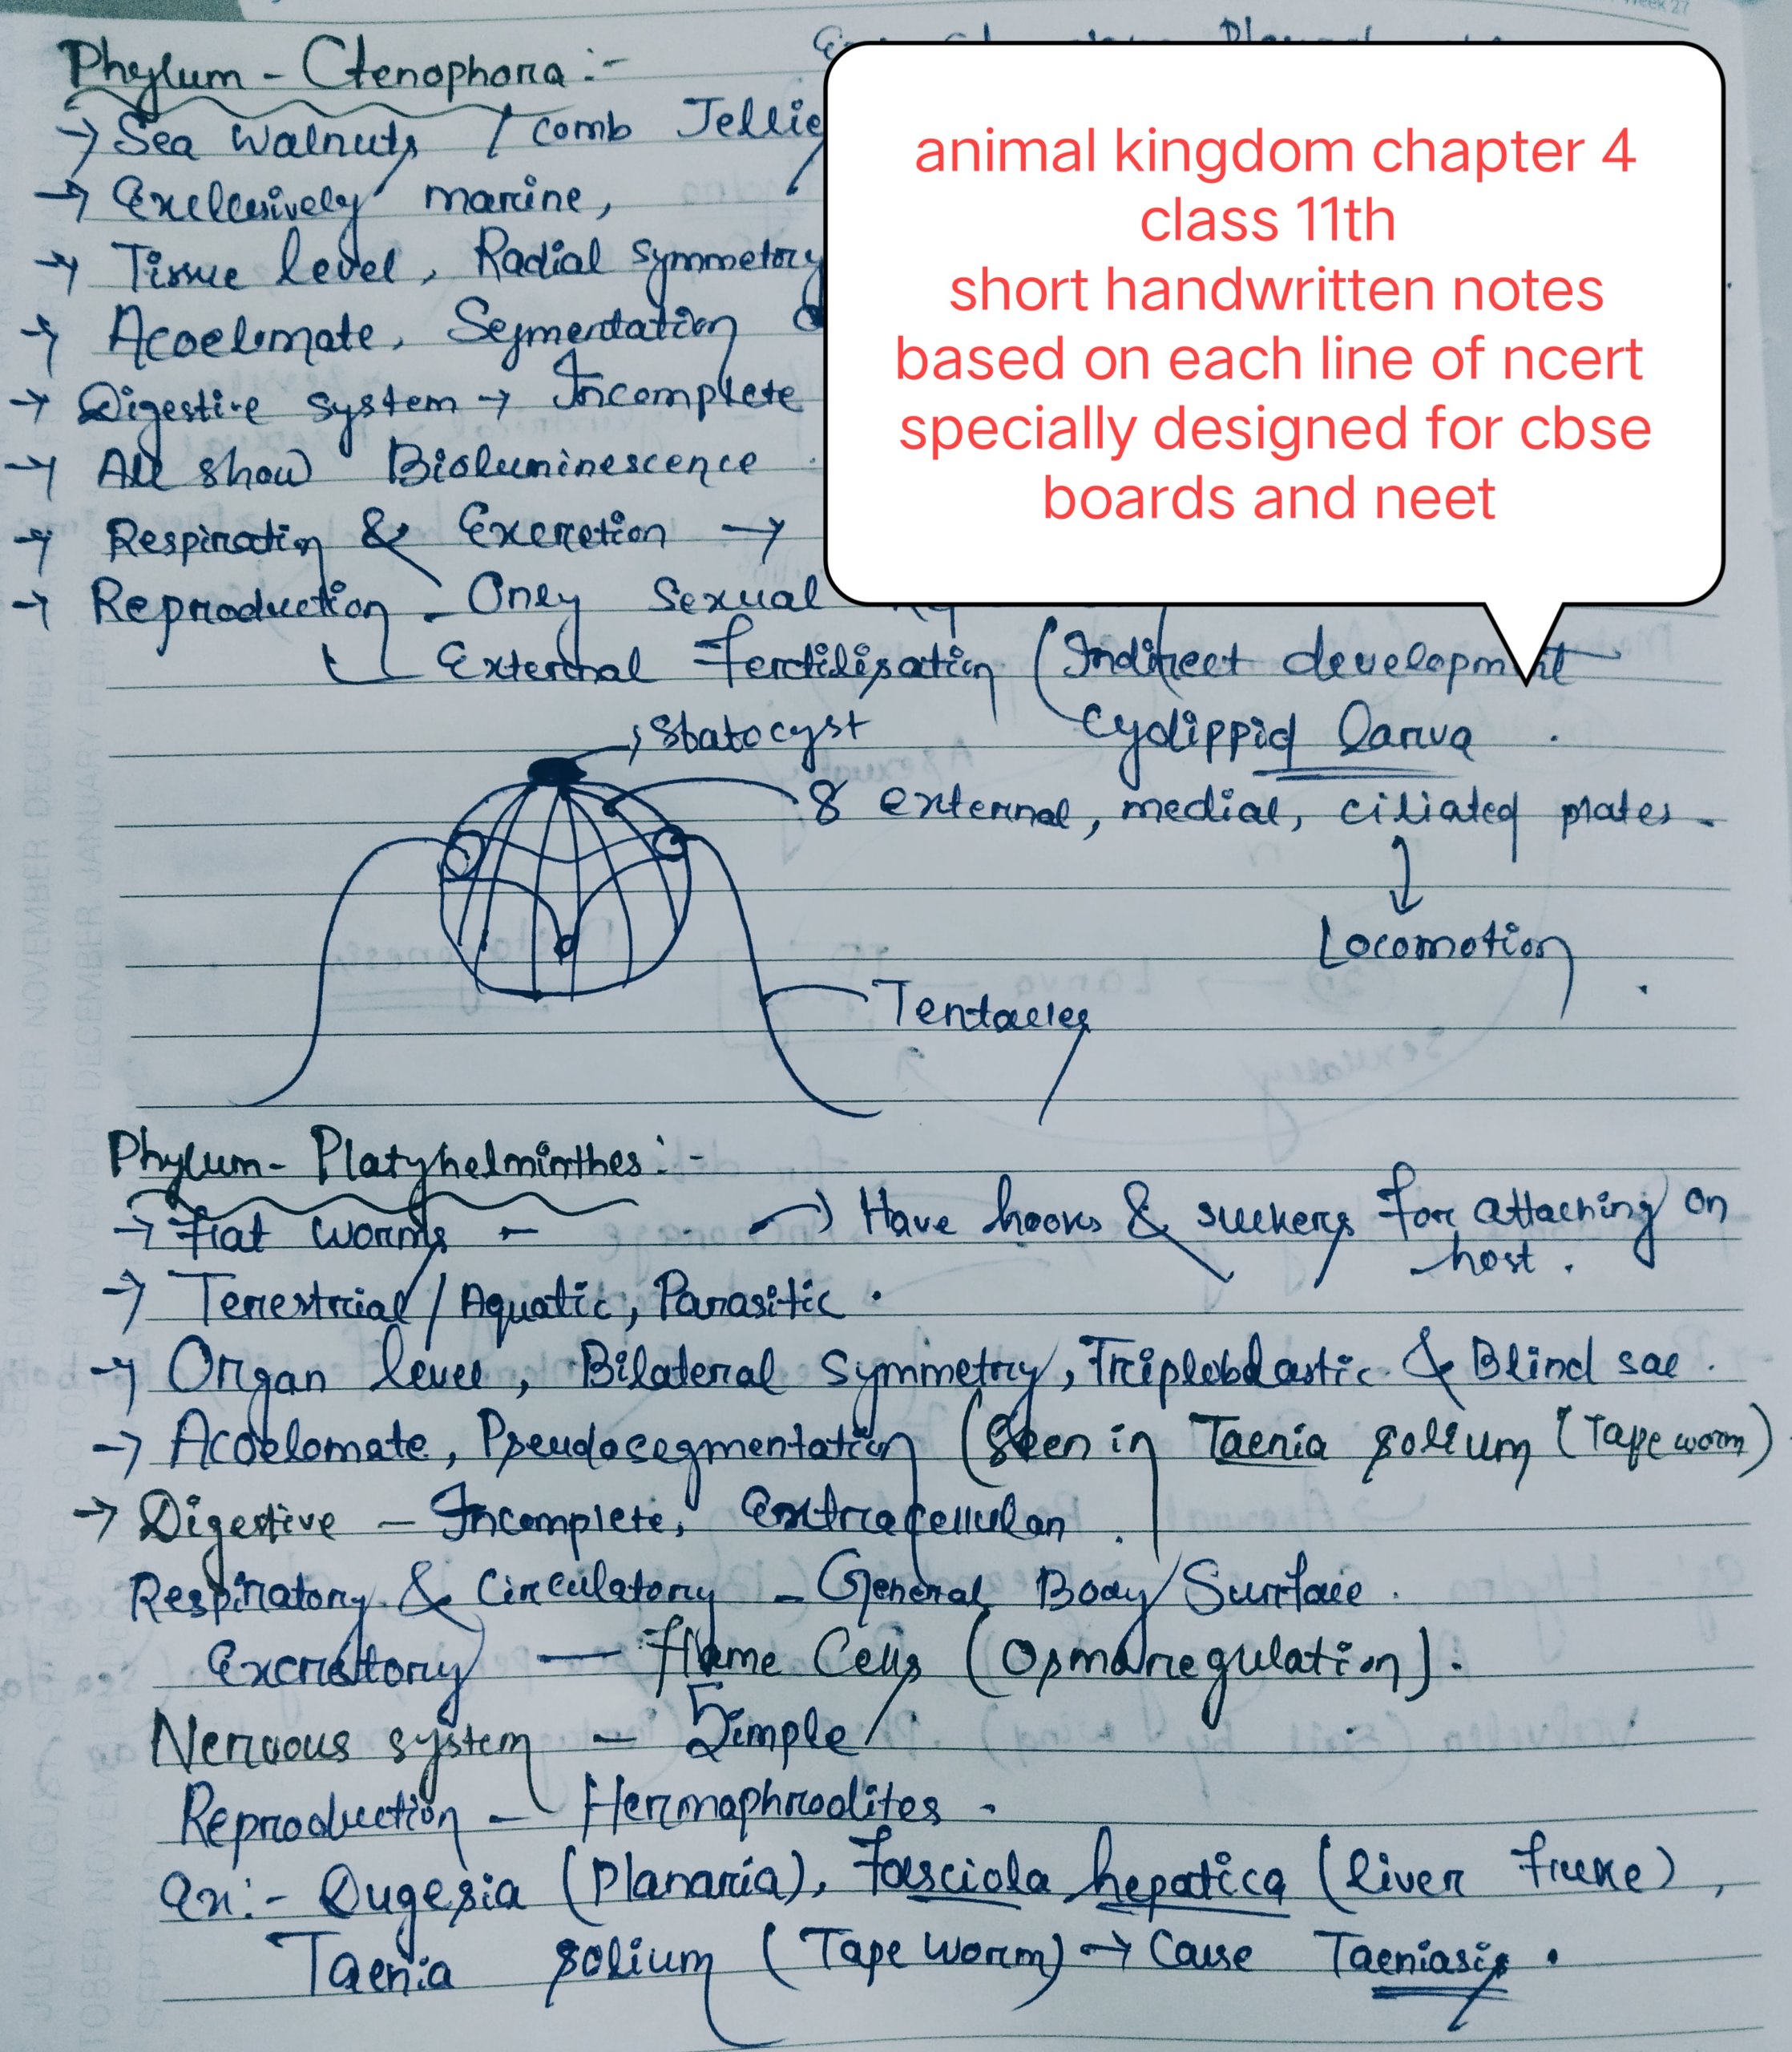 class 11th biology animal kingdom chapter 4 short handwritten notes